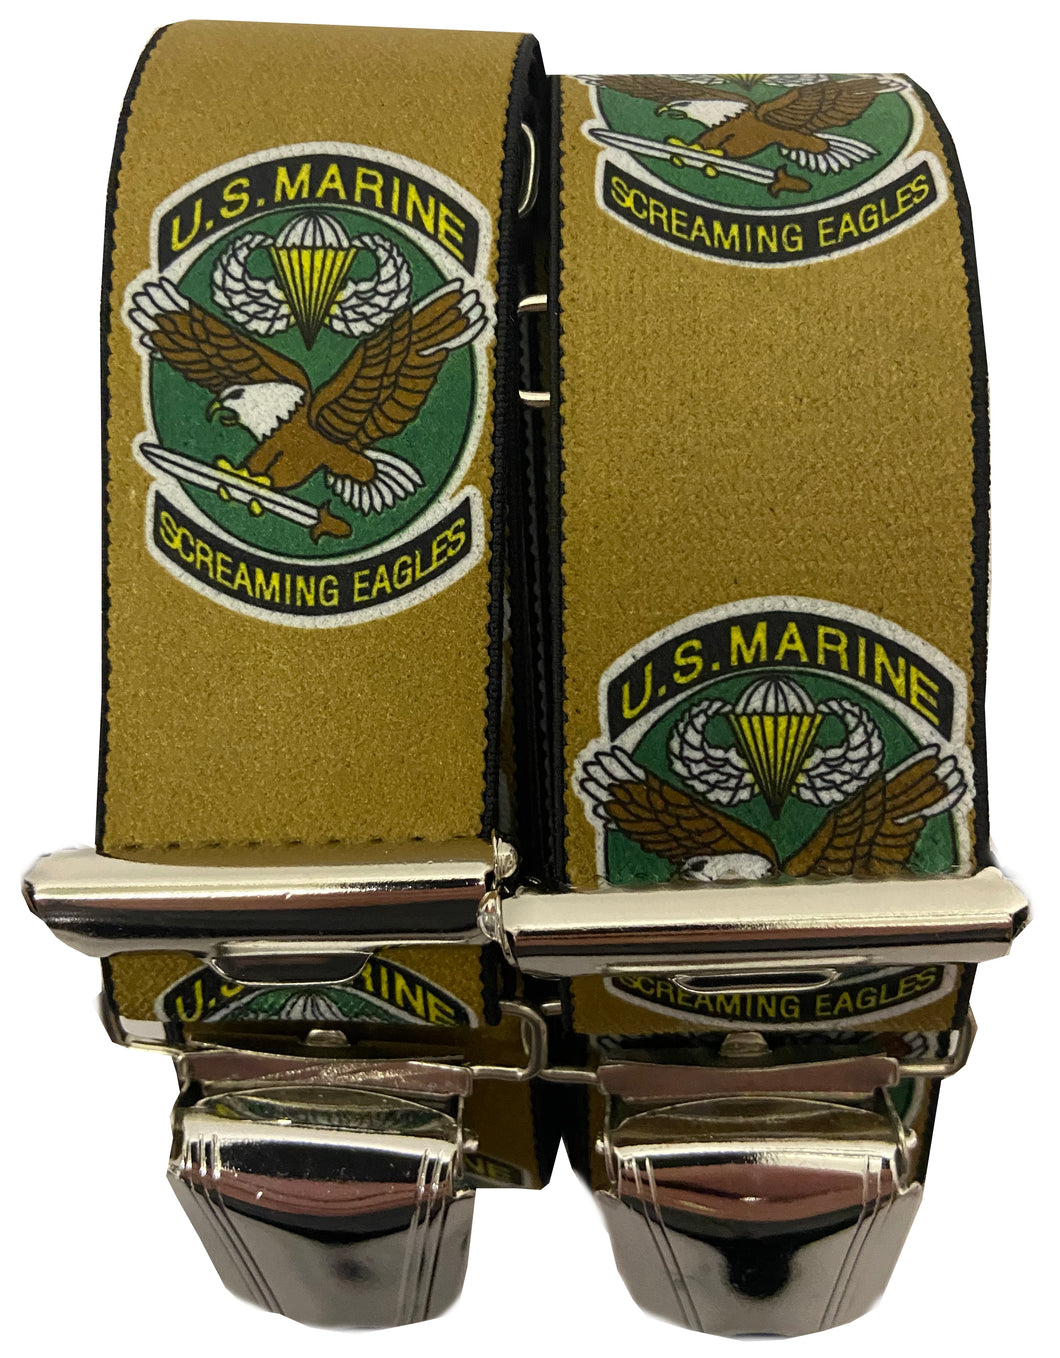 U.S. MARINE Hosenträger - Marines - Screaming Eagles - Adler (braun glatt)